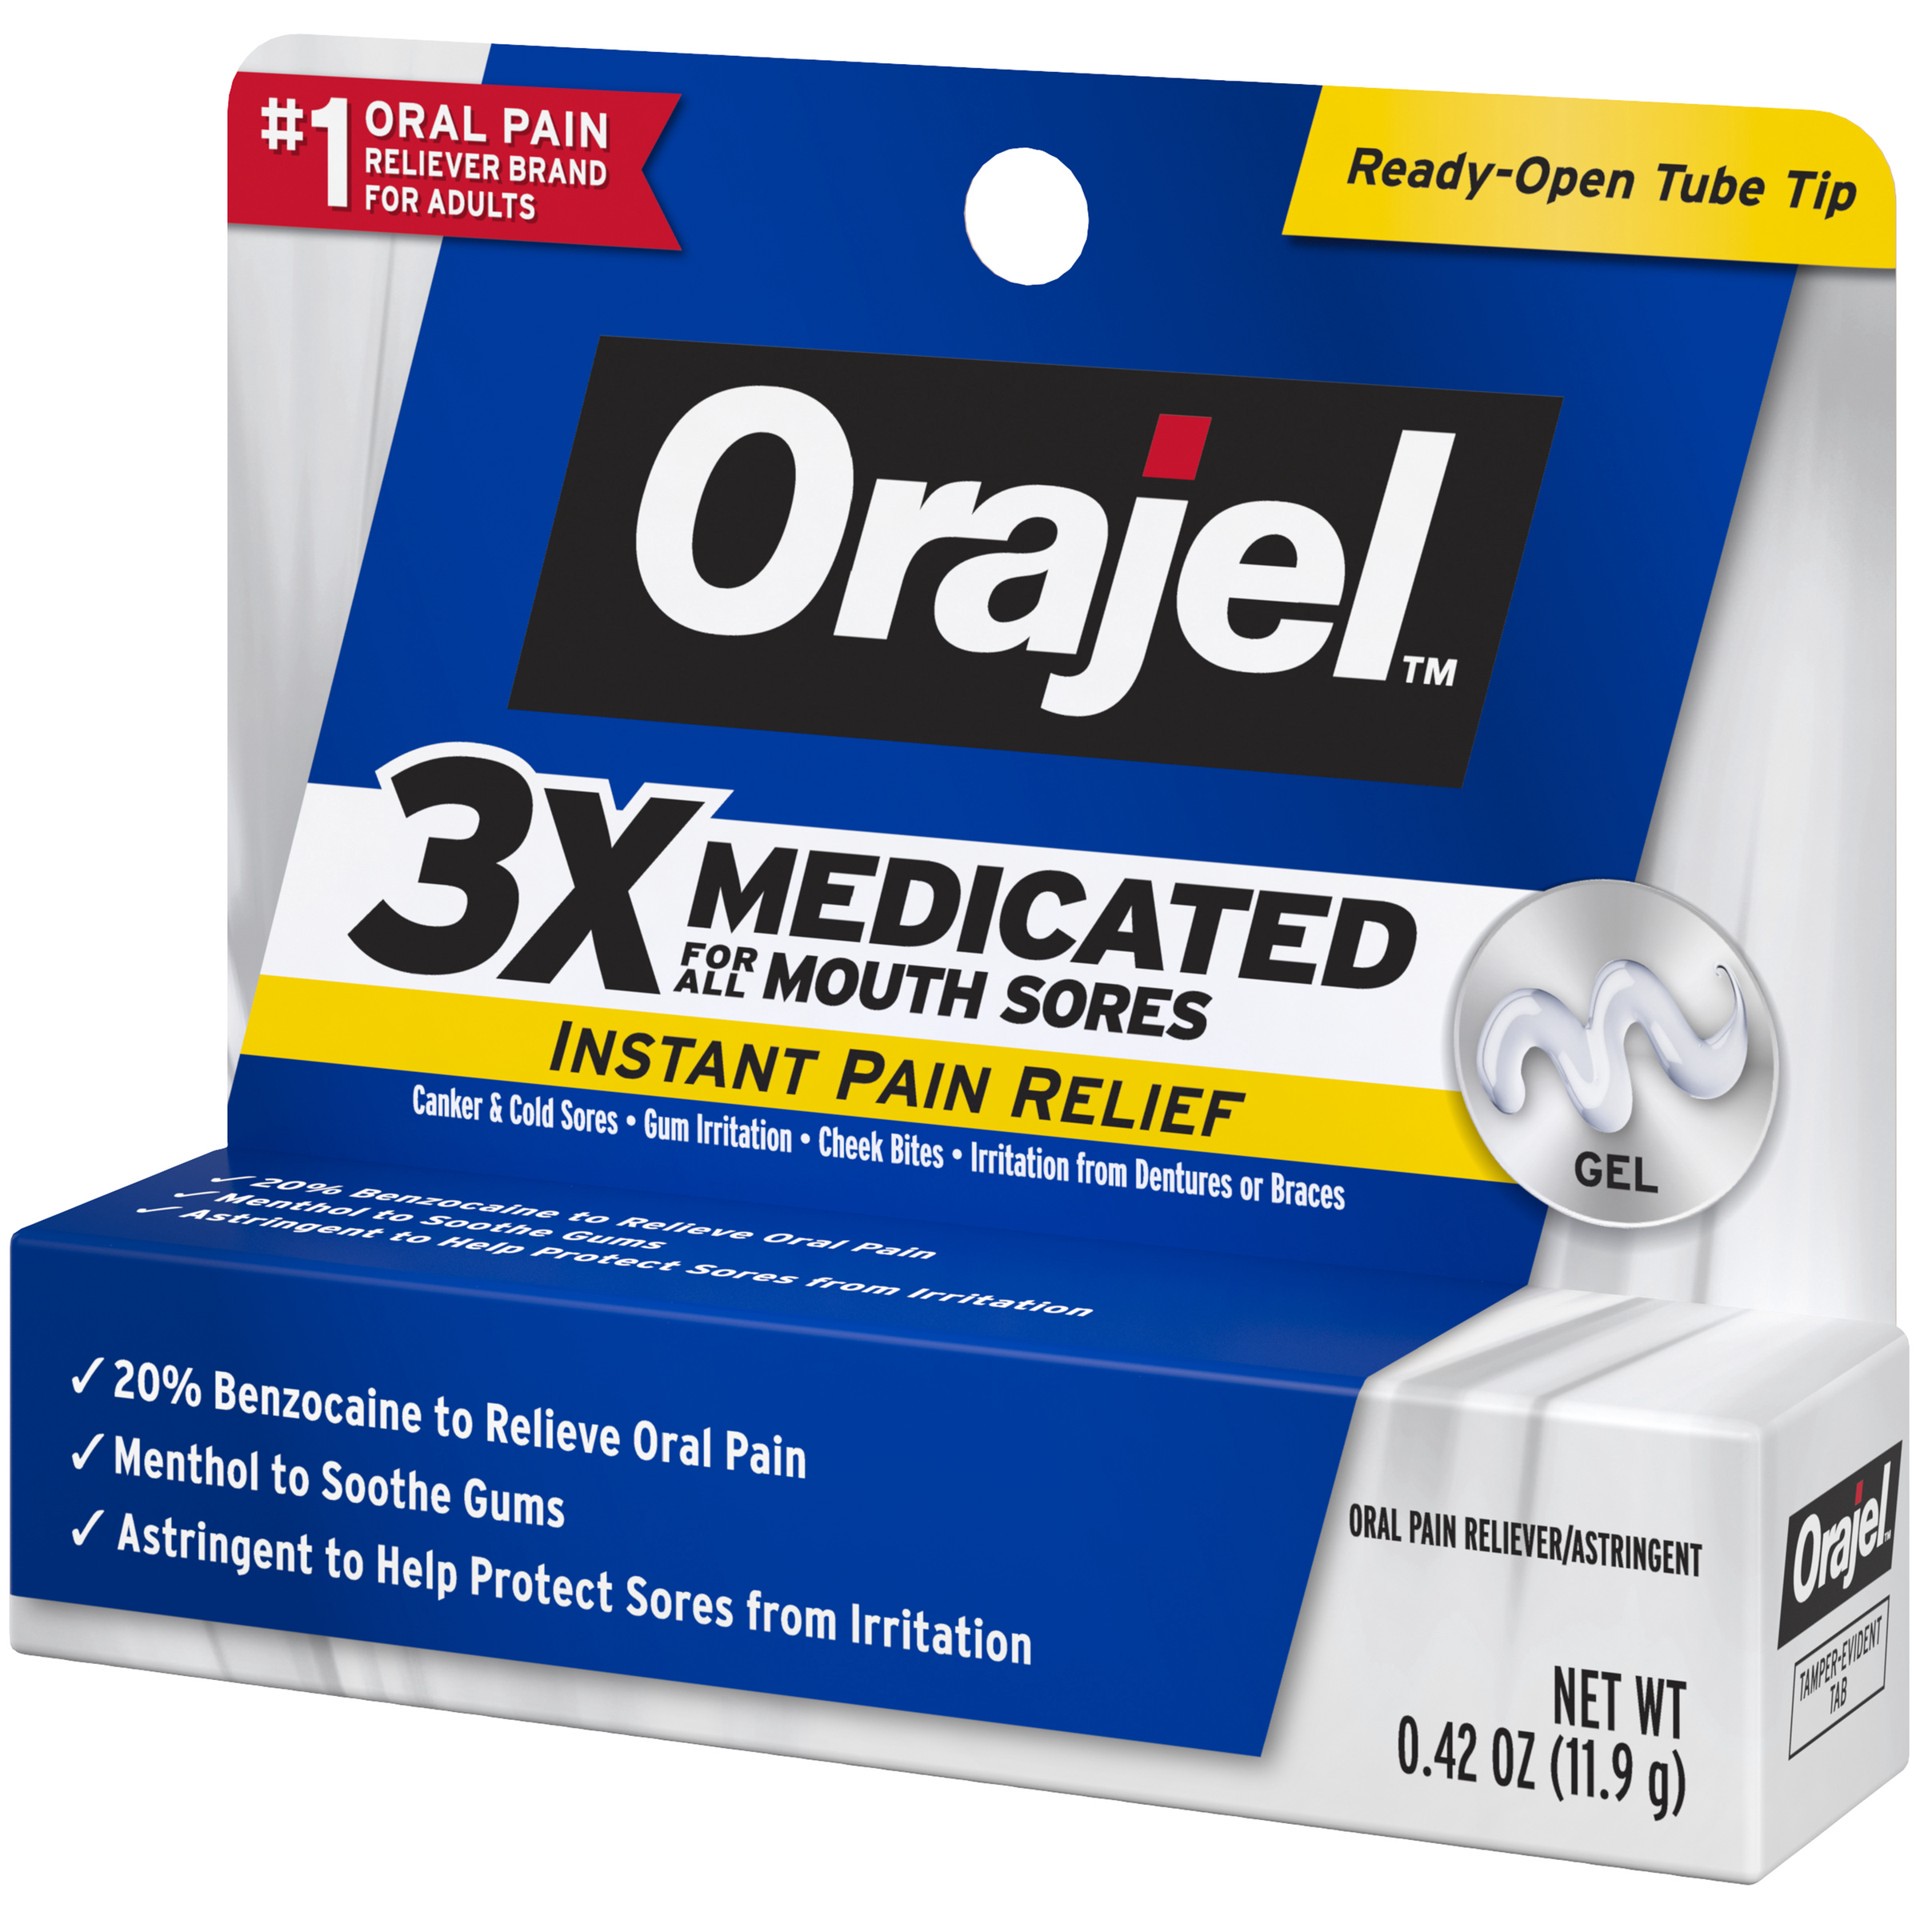 slide 4 of 4, Orajel Instant Pain Relief Gel Oral Pain Reliever/Astringent 0.42 oz, 0.42 oz